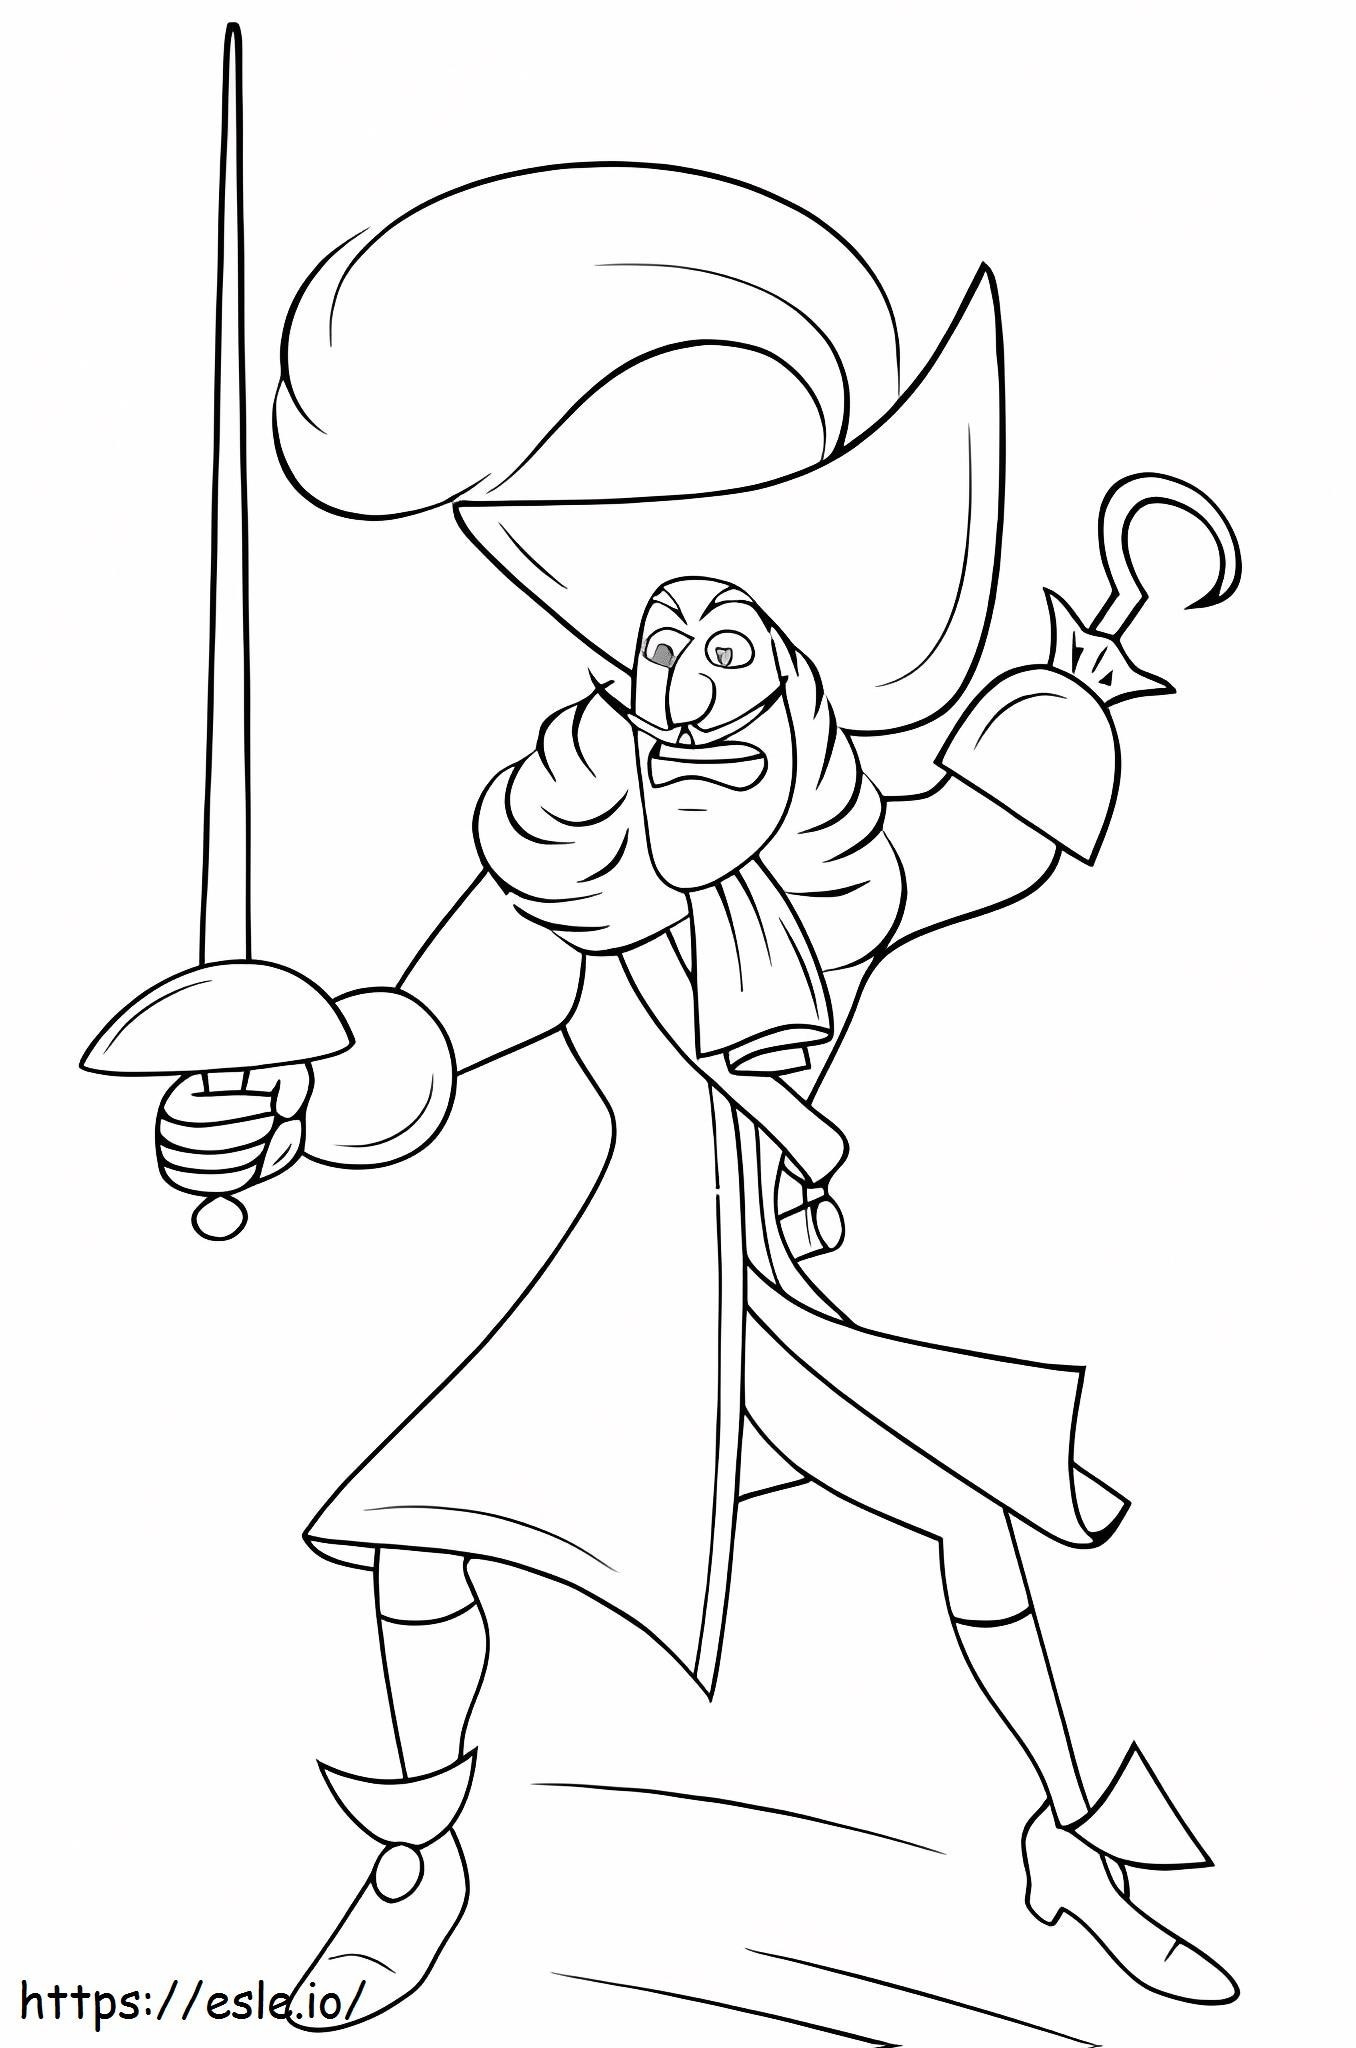 Dread Captain Hook coloring page